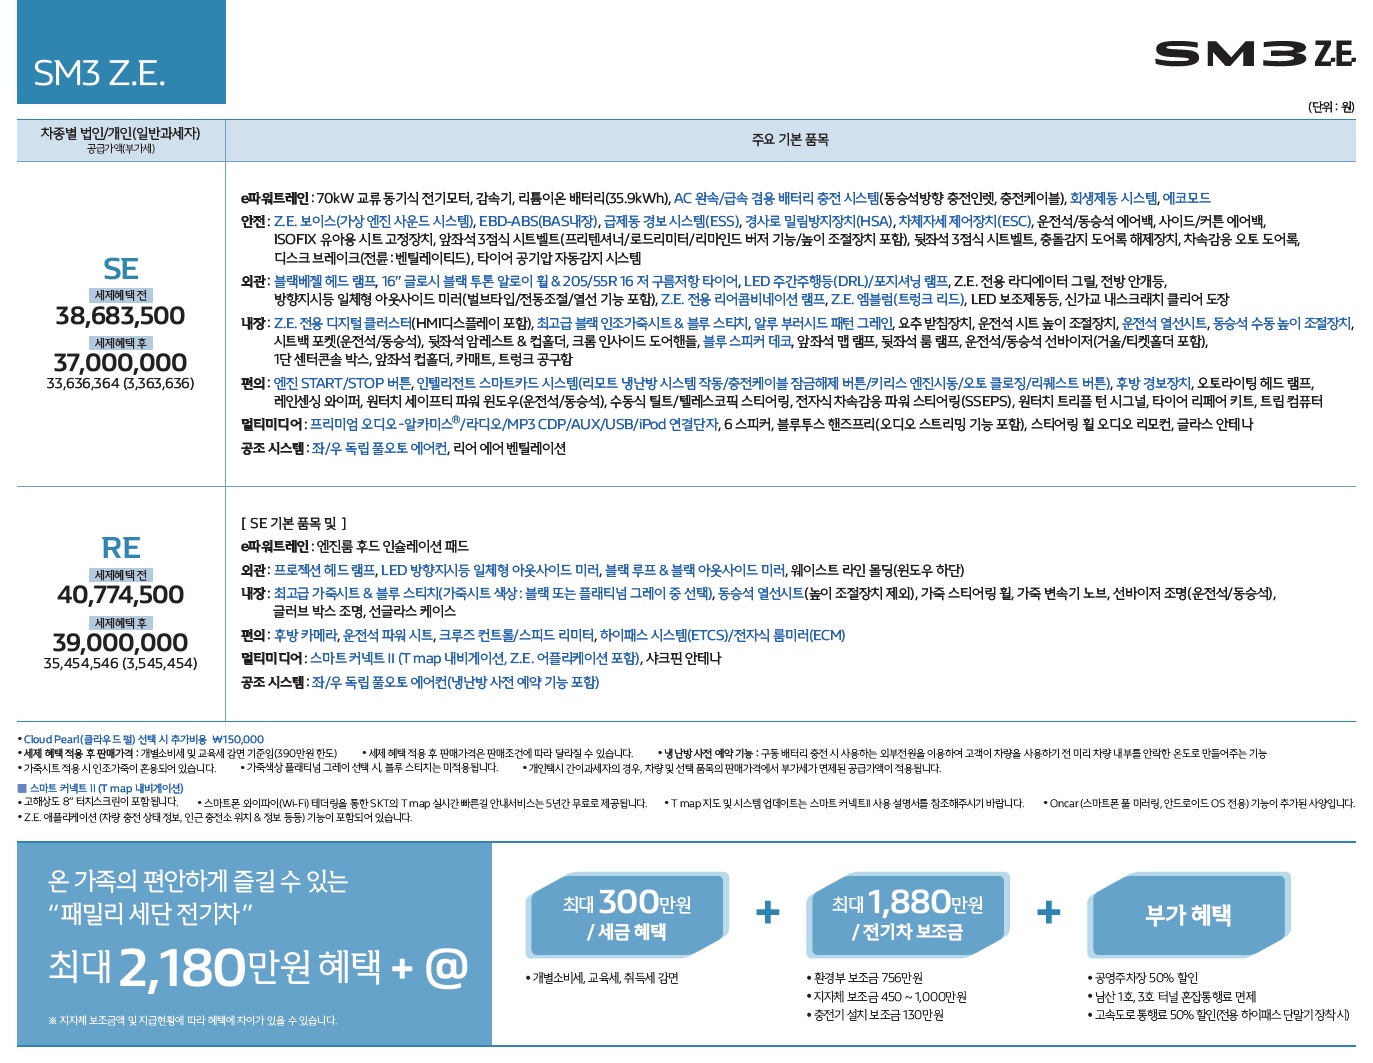 SM3 ZE 가격표 - 2019년형 (2019년 02월) -2.jpg